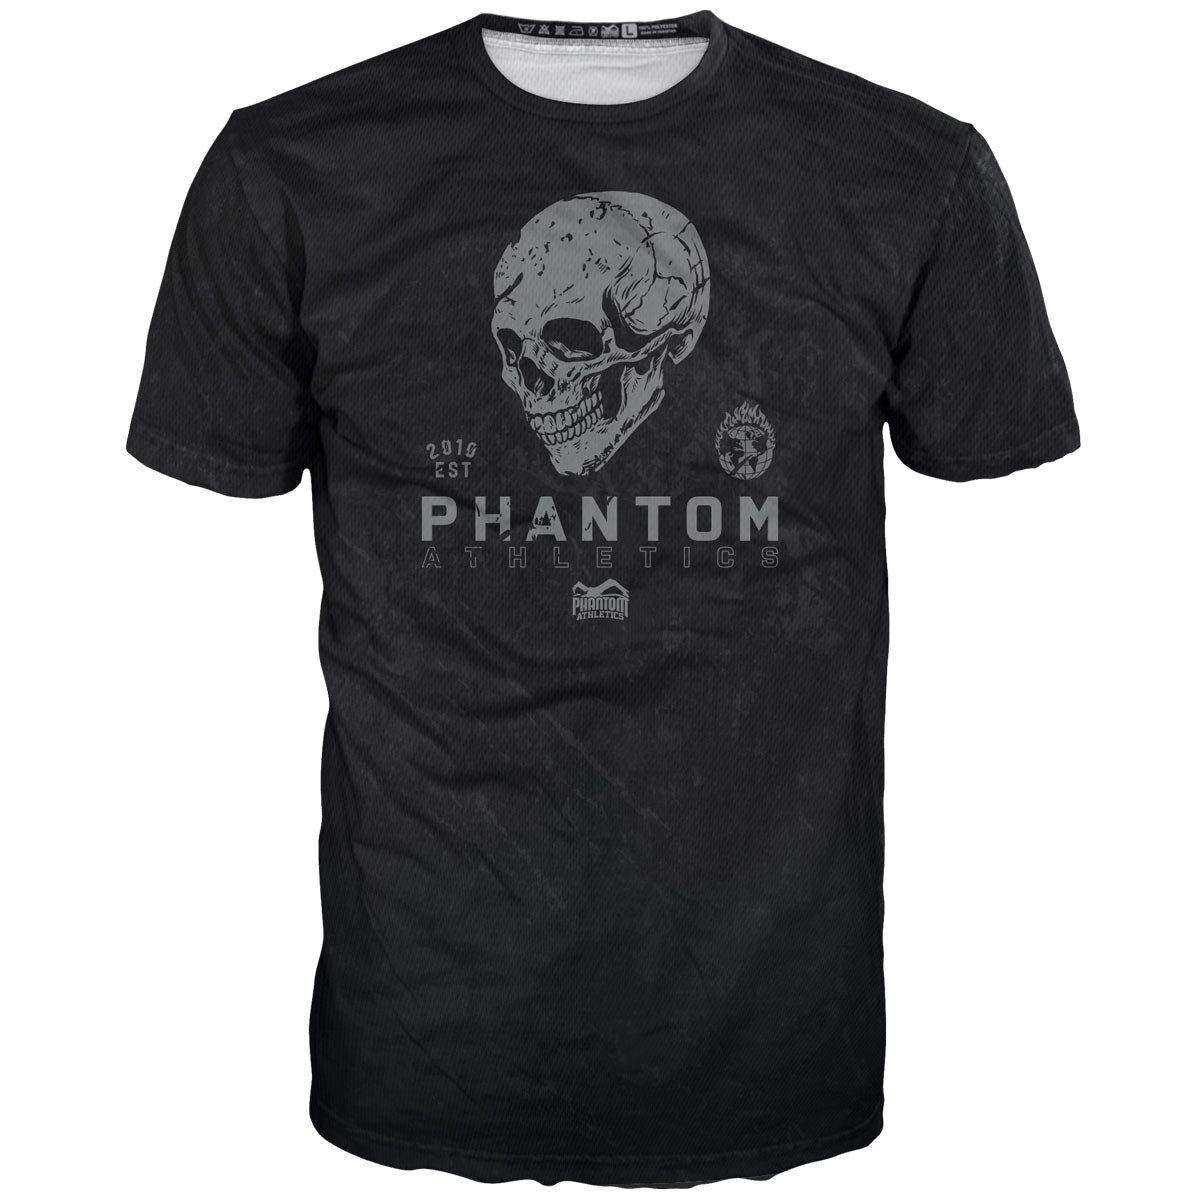 Phantom FIGHT shirt in skull design with skull. Ideal for your martial arts training. 